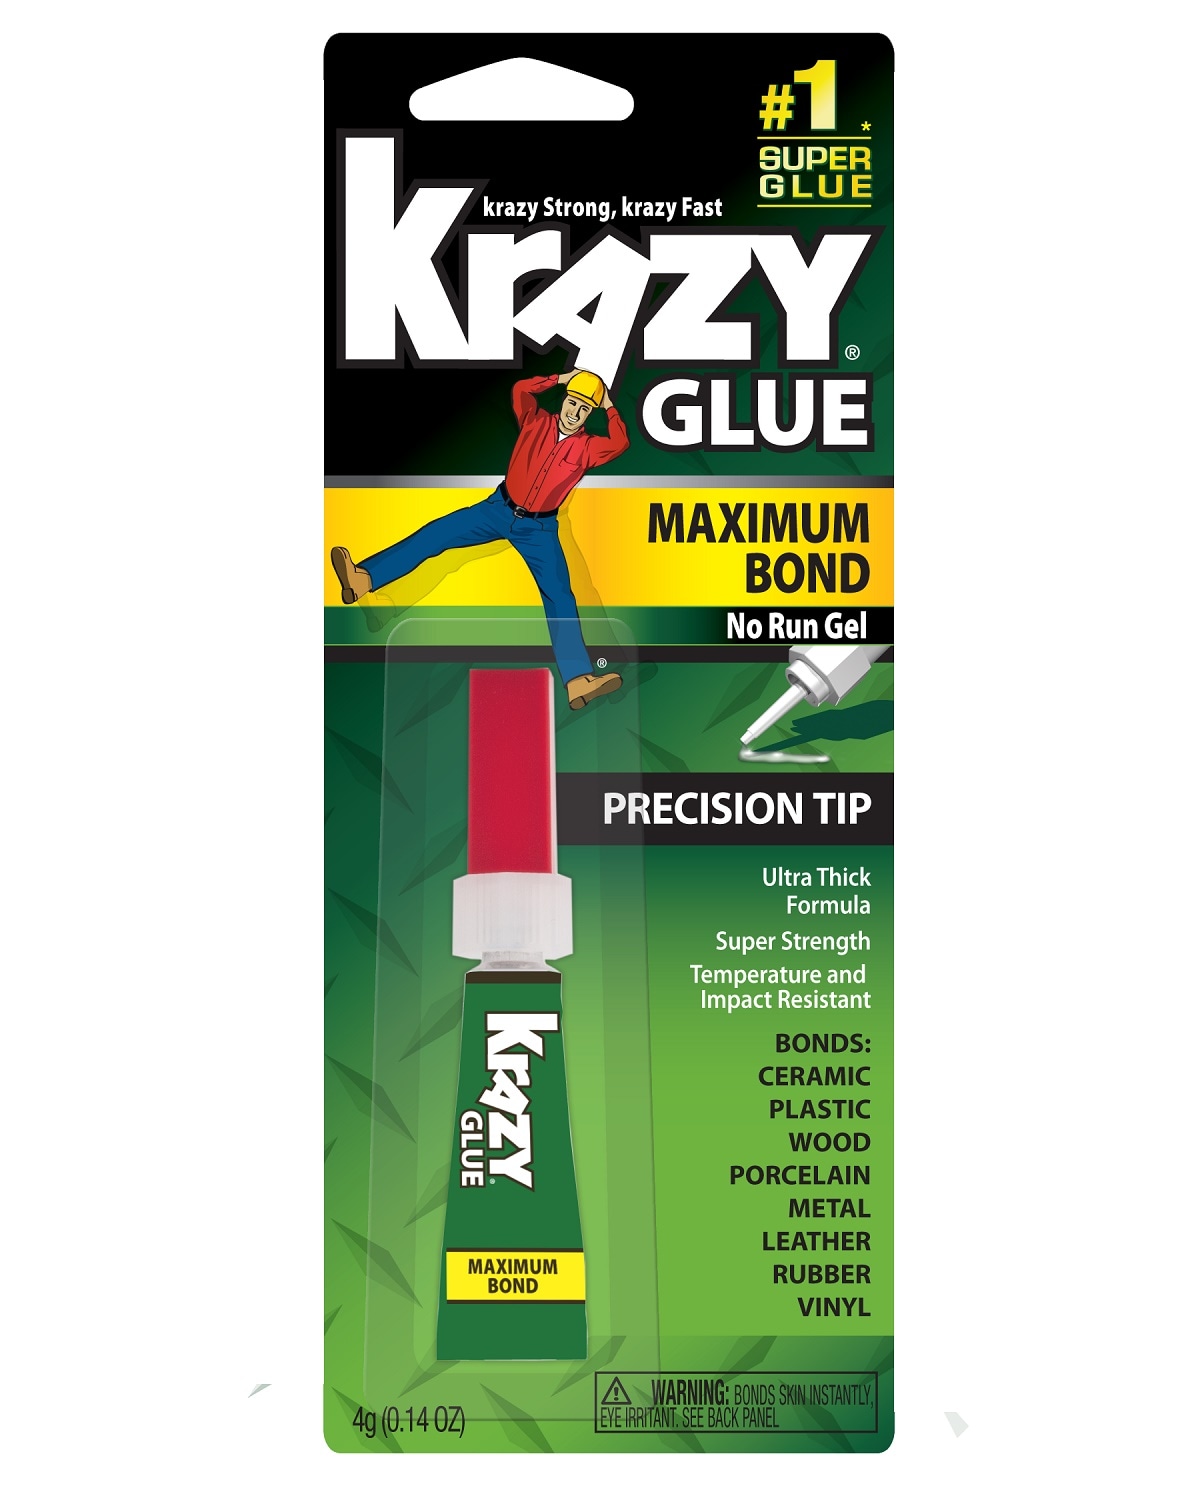 Krazy Glue Maxbd Gel 2pk - Yahoo Shopping